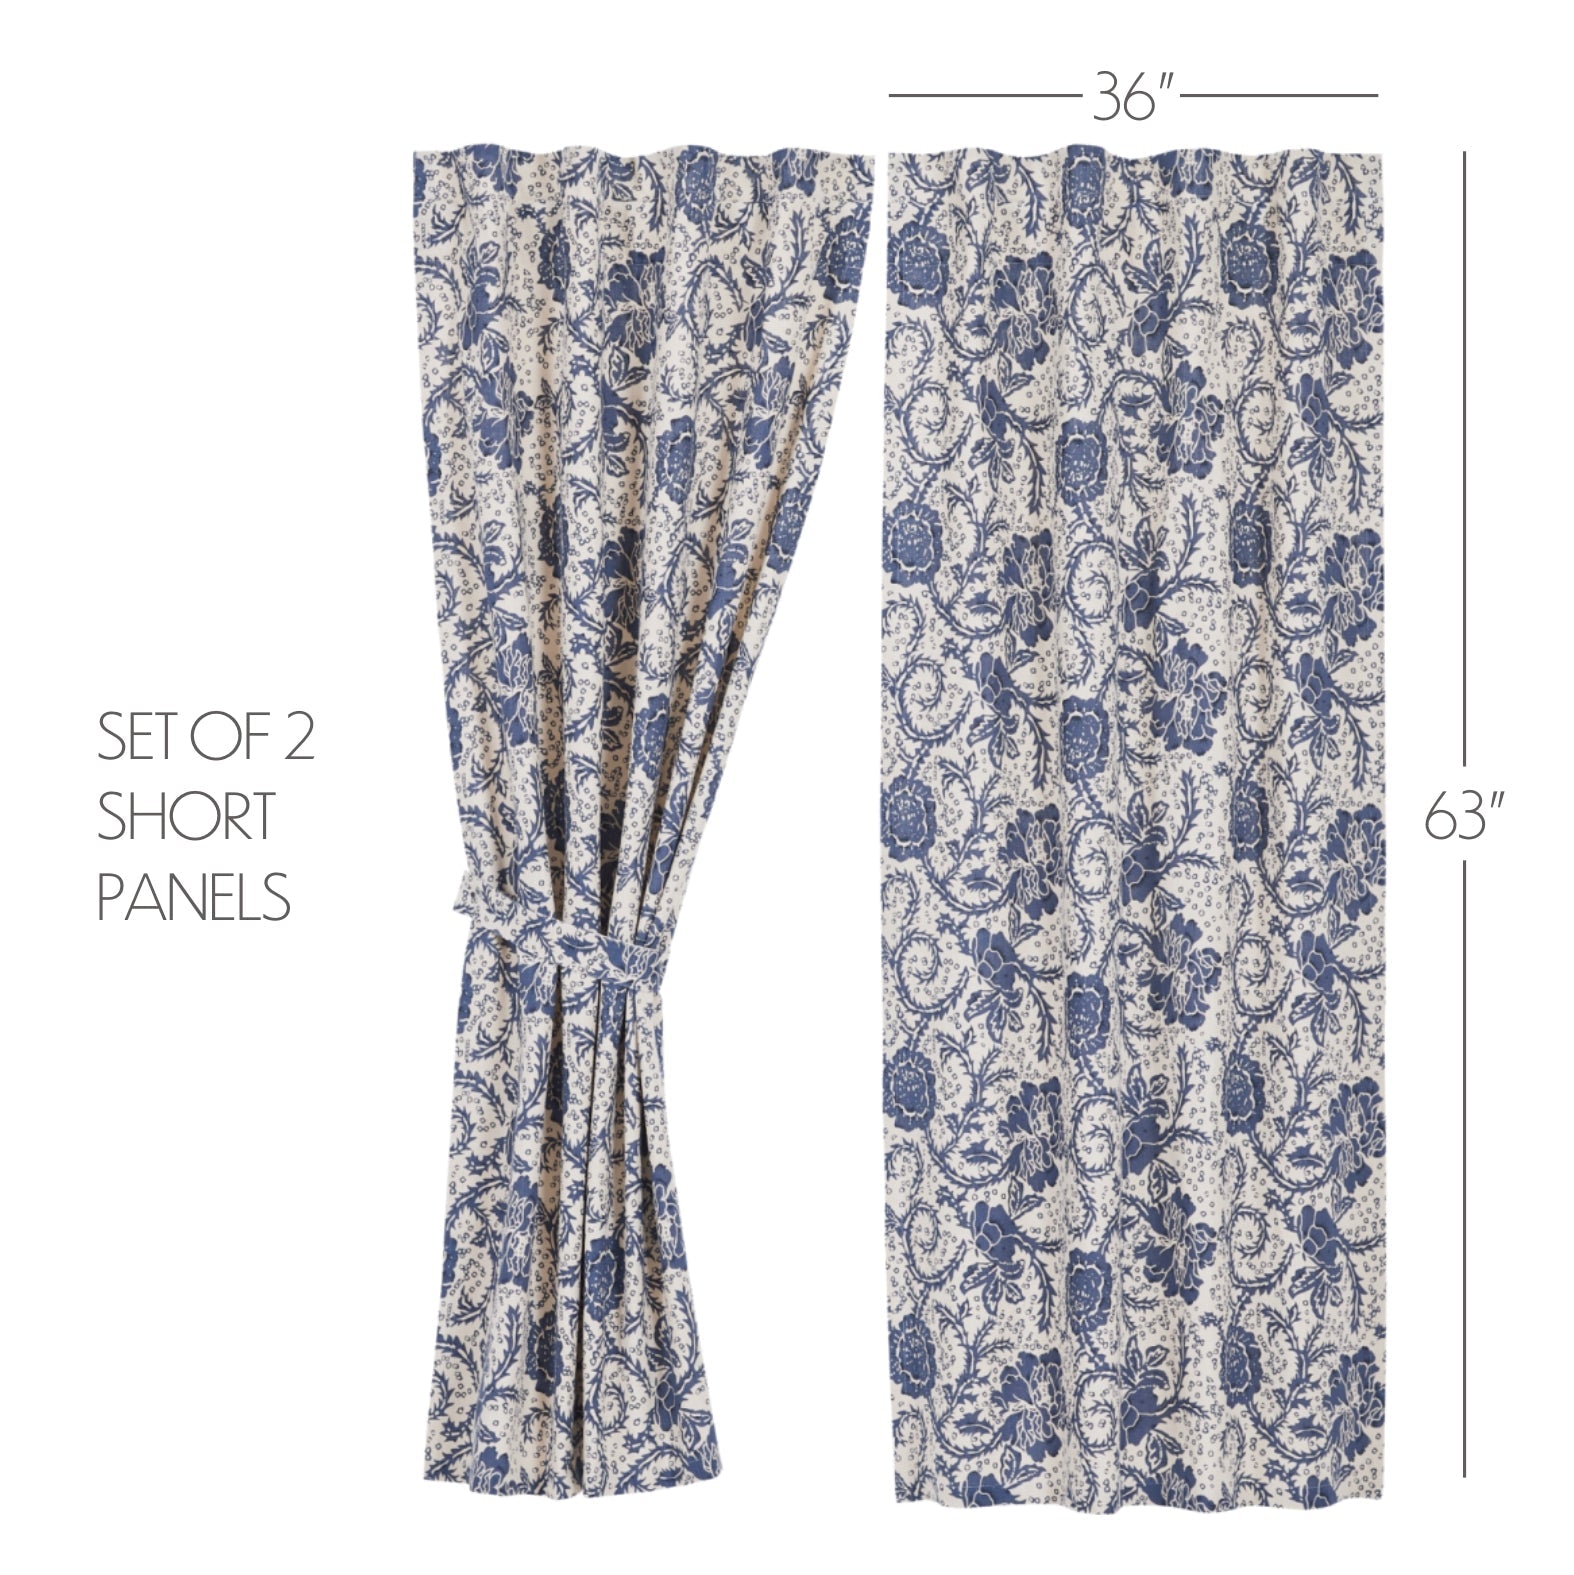 Dorset Navy Floral Short Panel Curtain Set of 2 63x36 VHC Brands